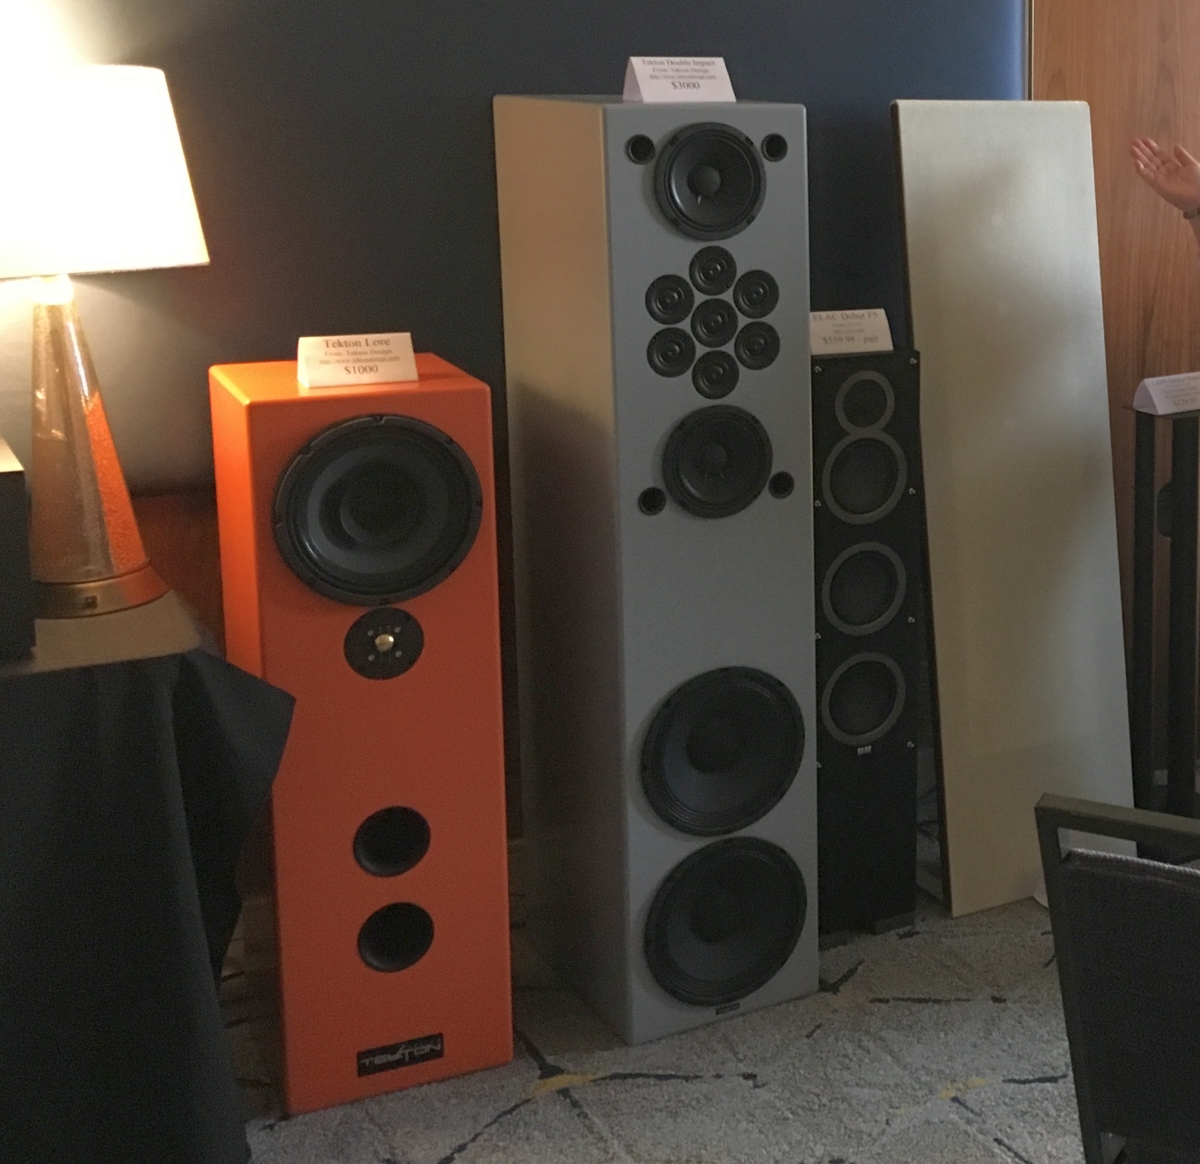 tekton speakers double impact